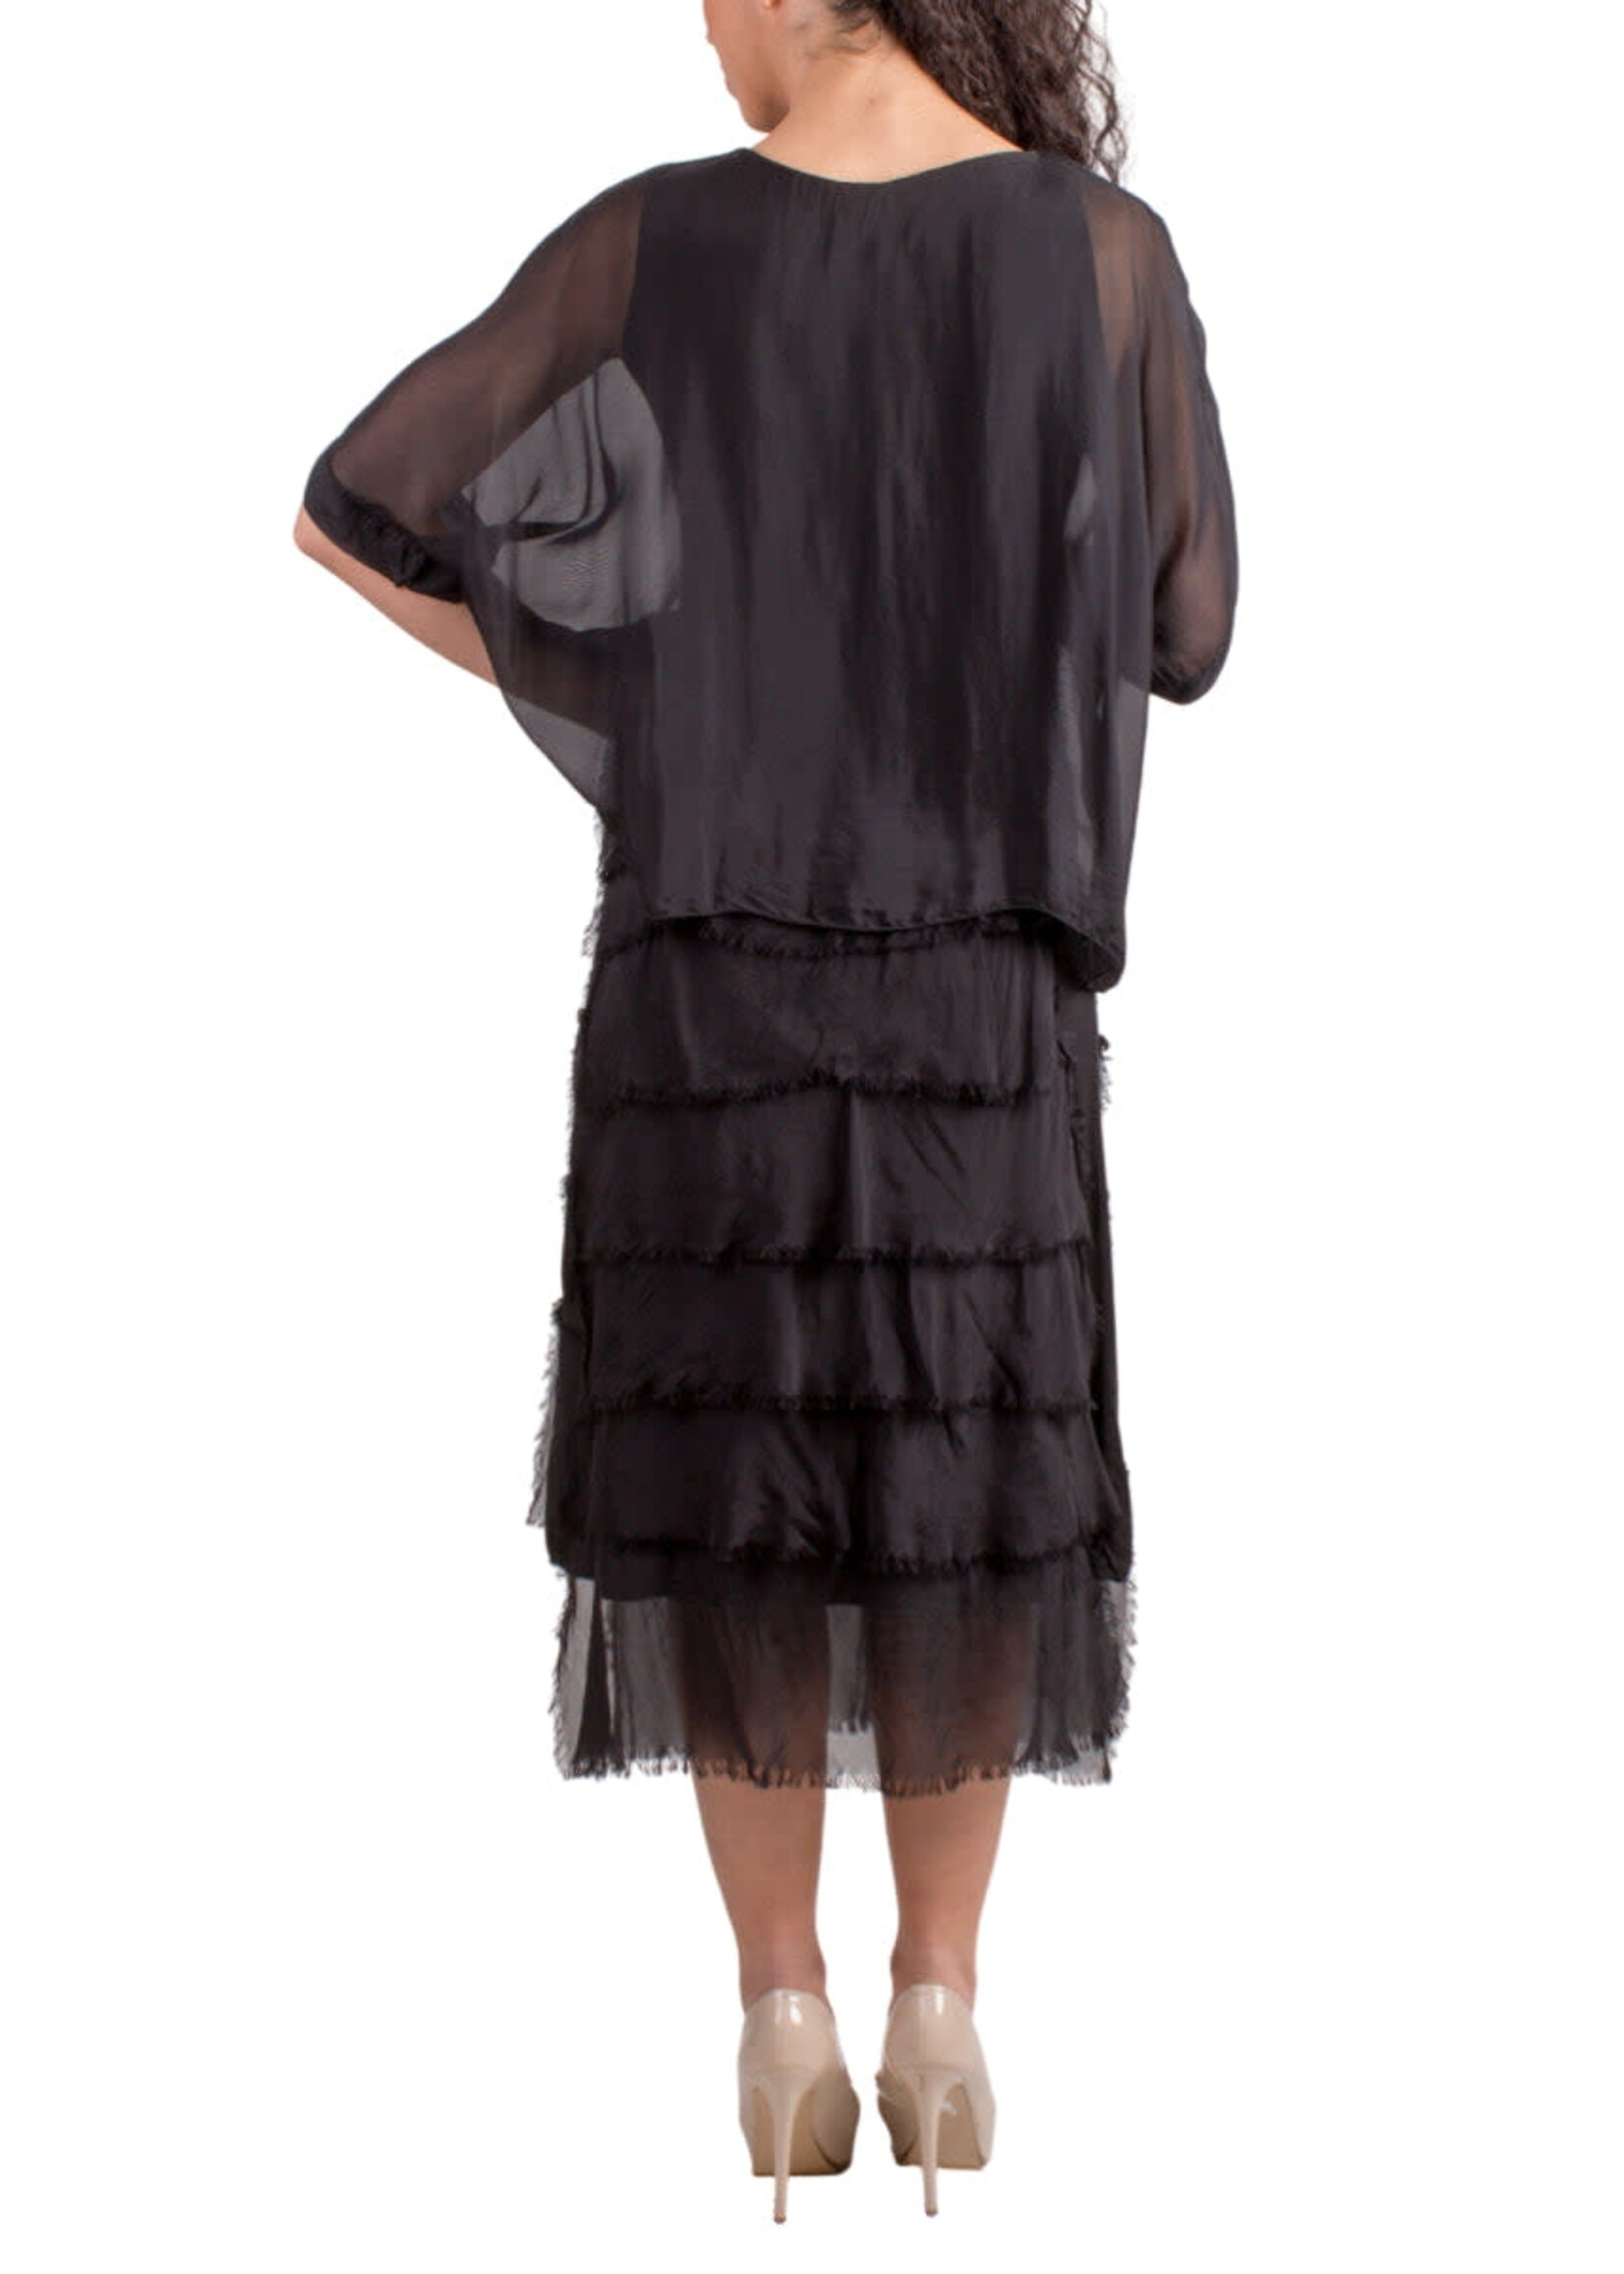 Gigi Moda Maxi Scoop Neck Dress w/ Ruffle Skirt (Chocolate)O/S